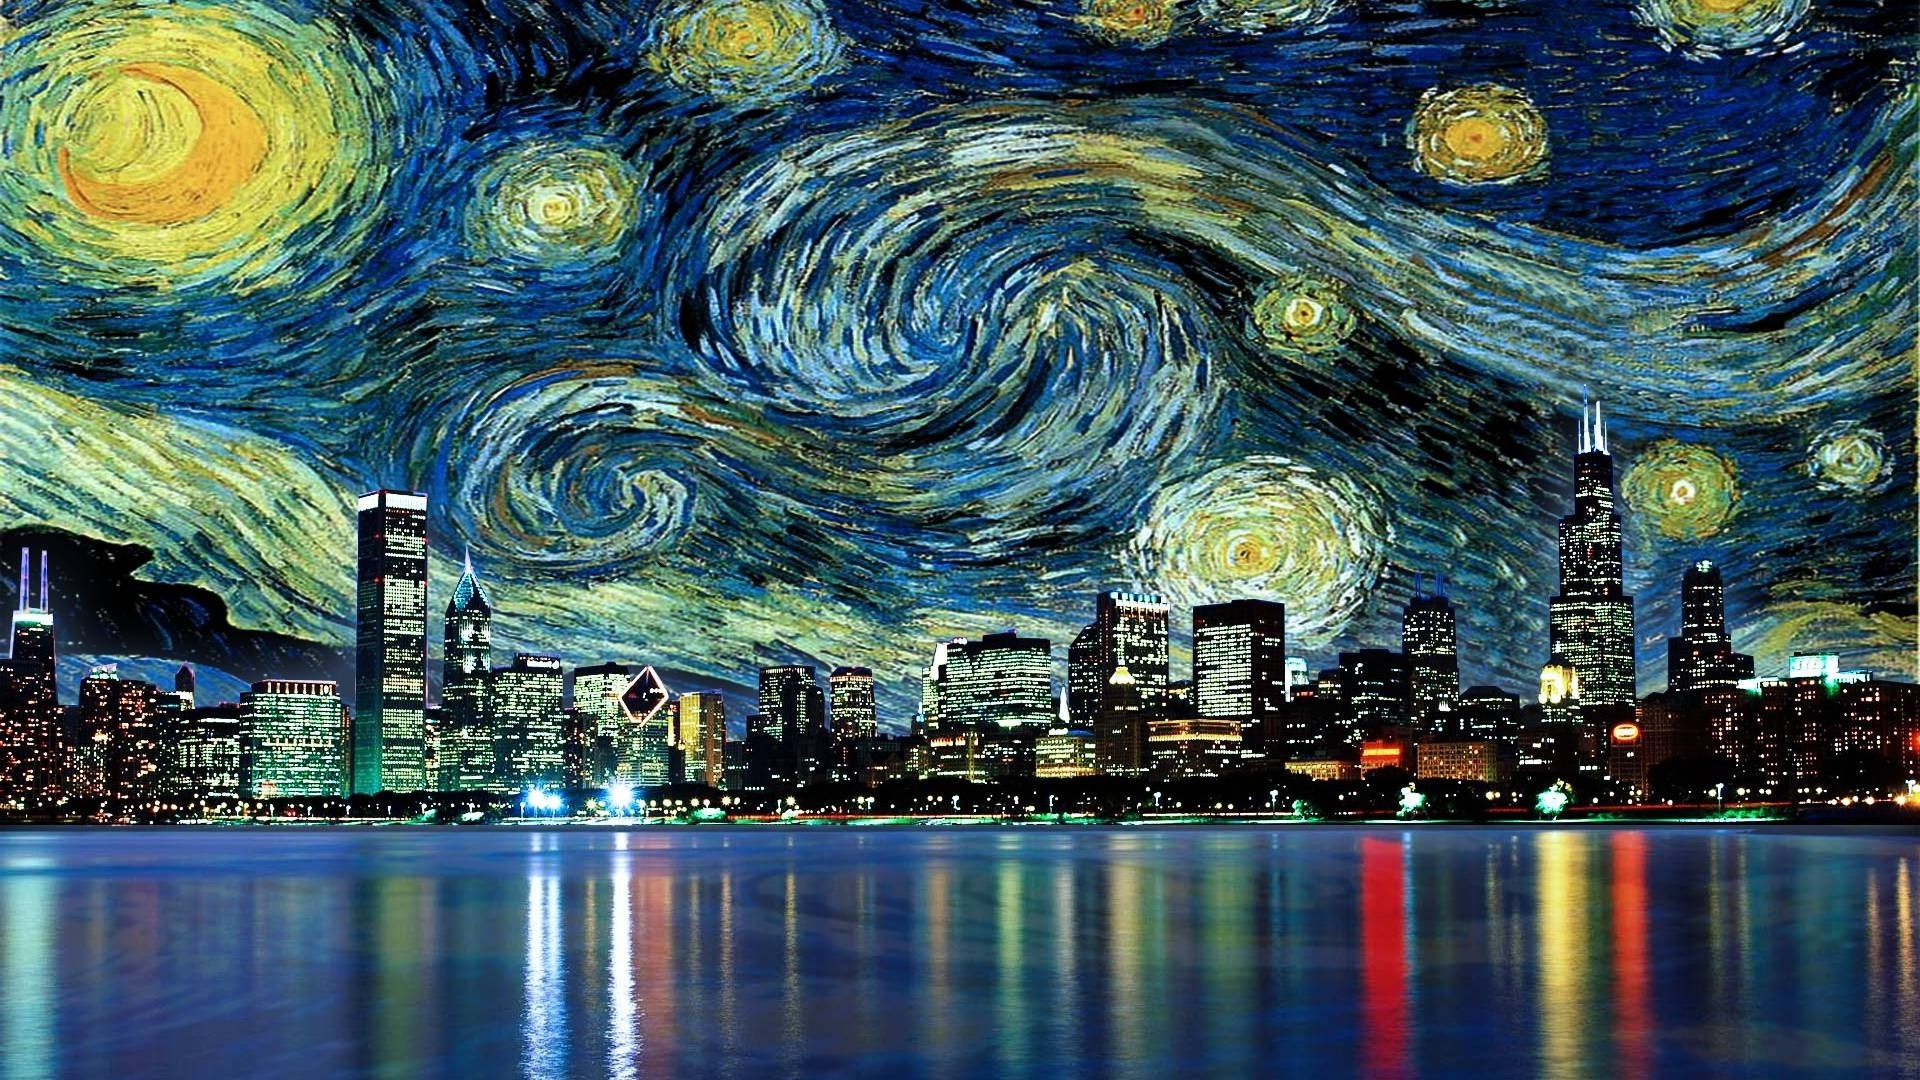 Vincent Van Gogh Starry Night Wallpaper